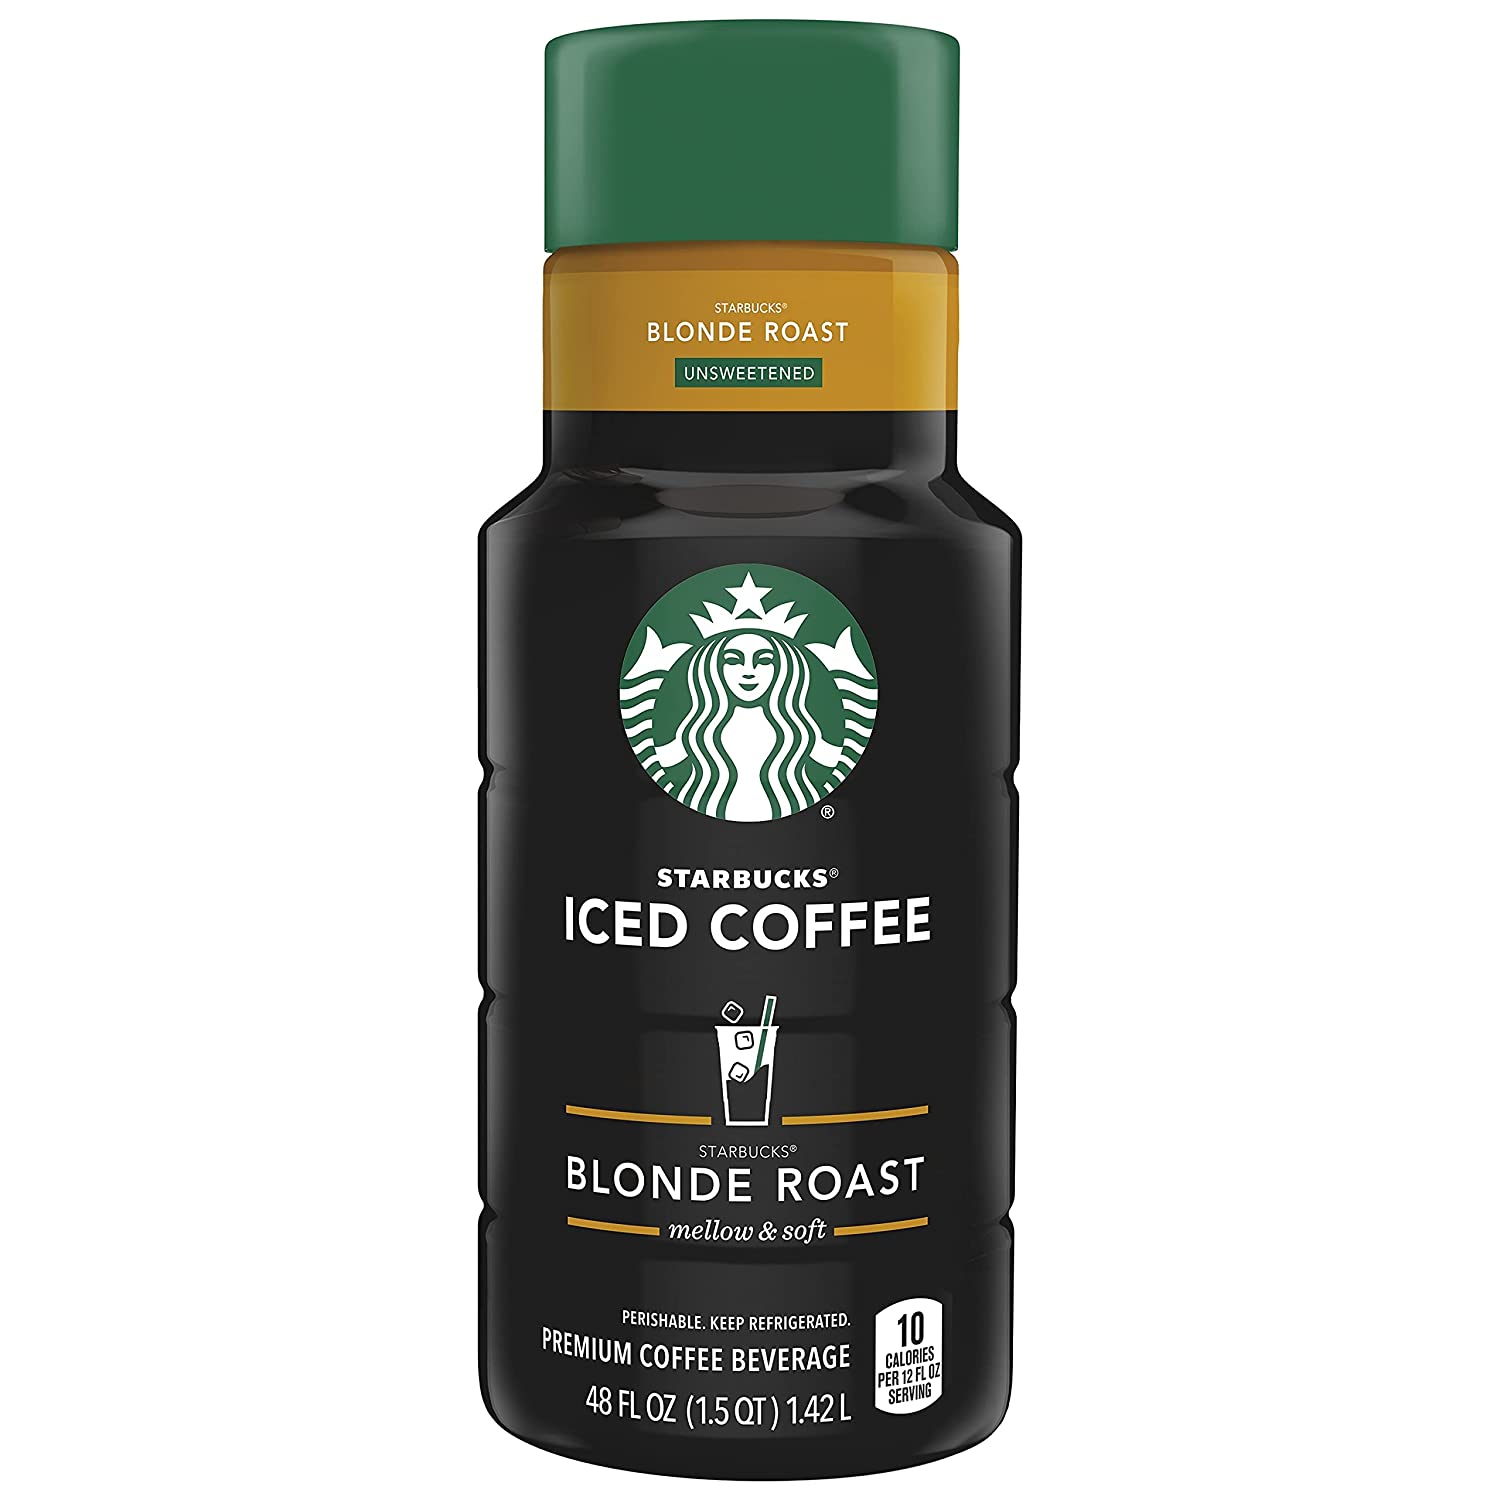 1. Starbucks Blonde Roast Iced Coffee Unsweetened 